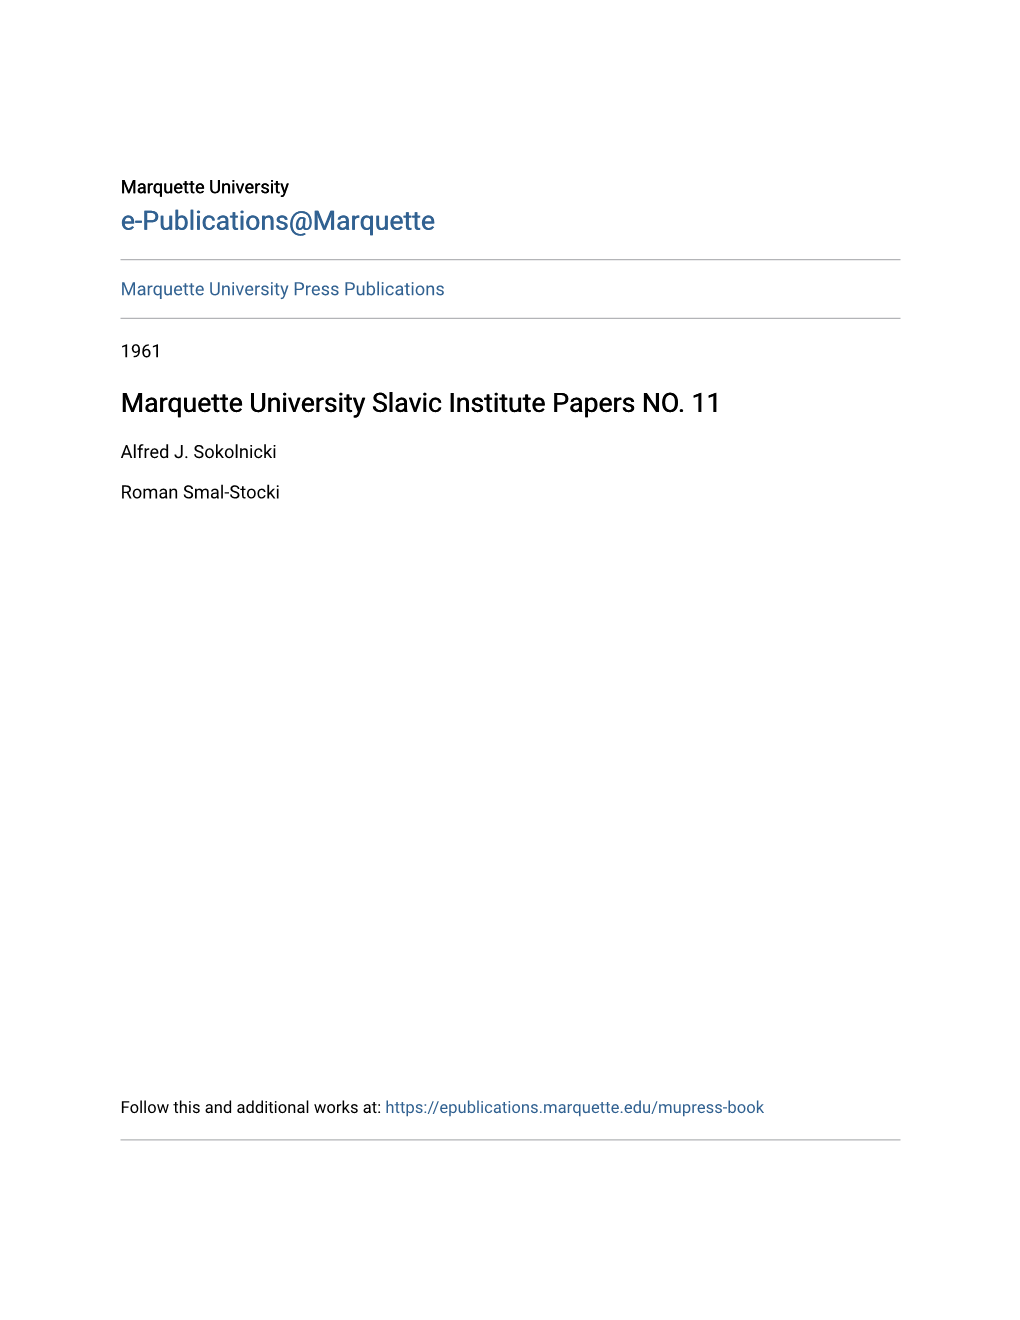 Marquette University Slavic Institute Papers NO. 11